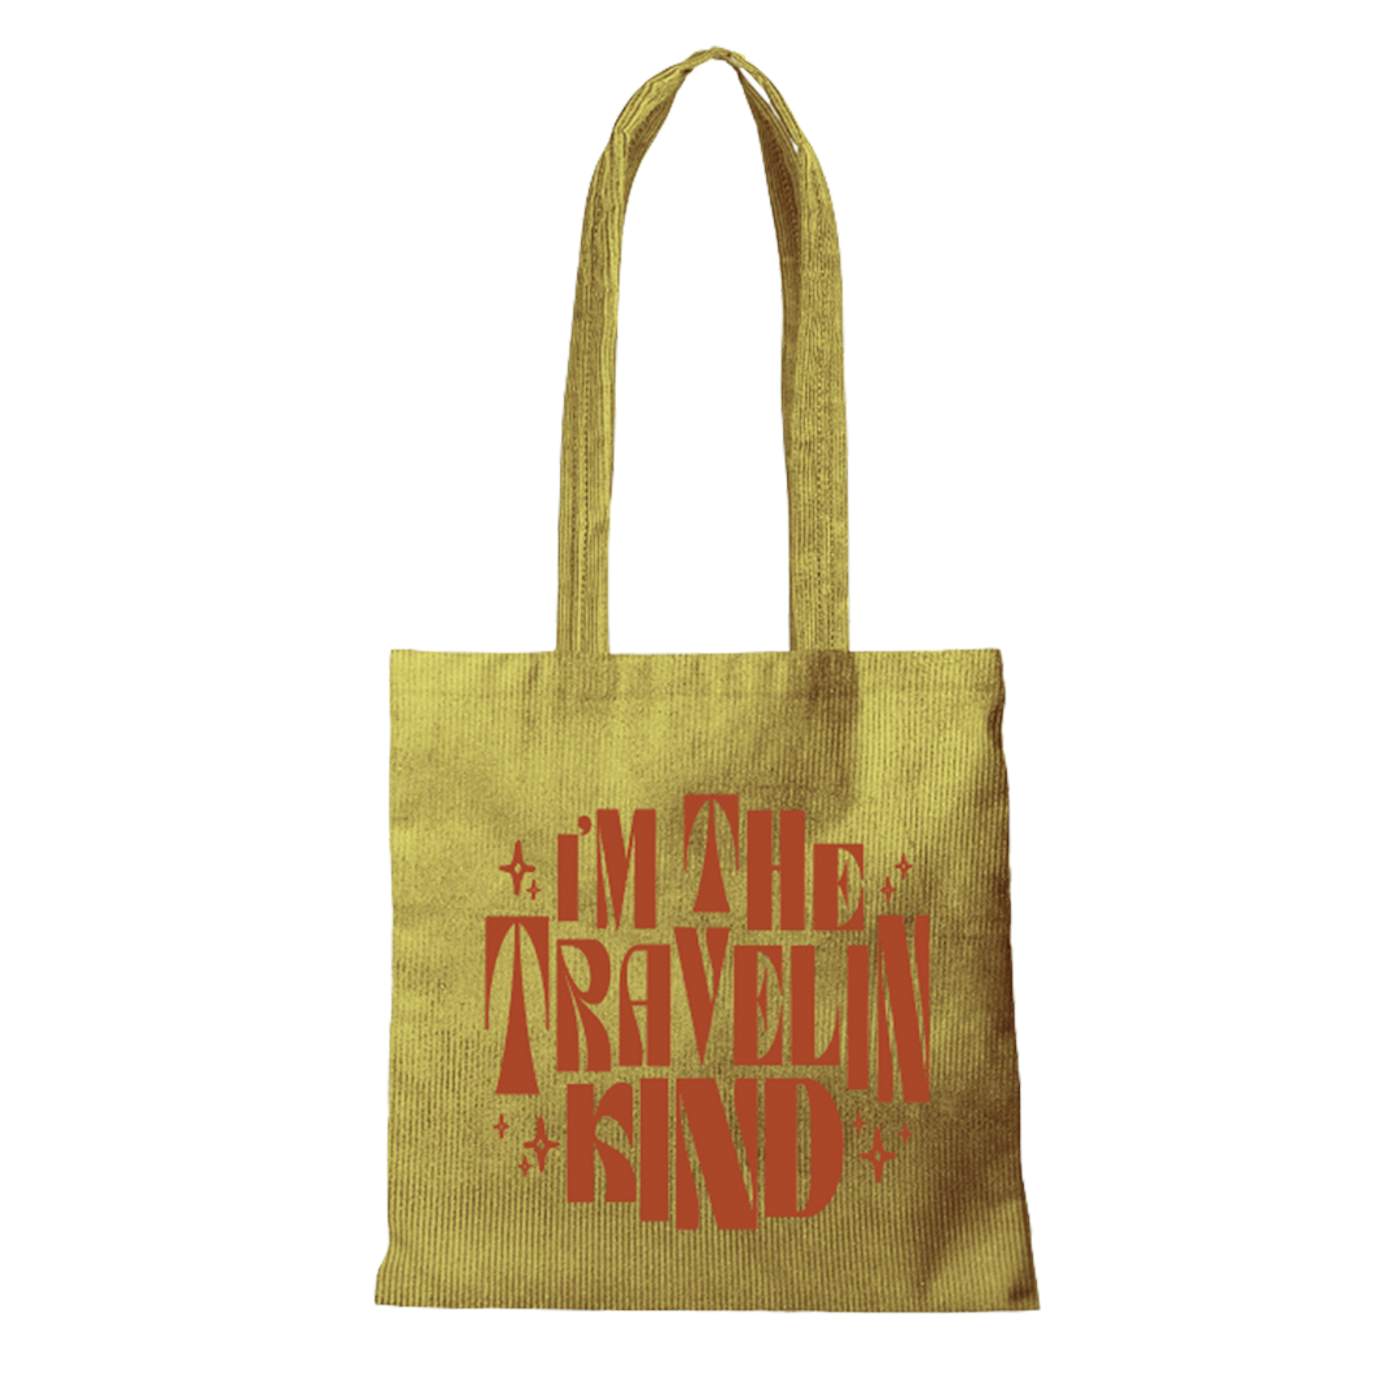 Ashland Craft Travelin' Kind Corduroy Tote Bag